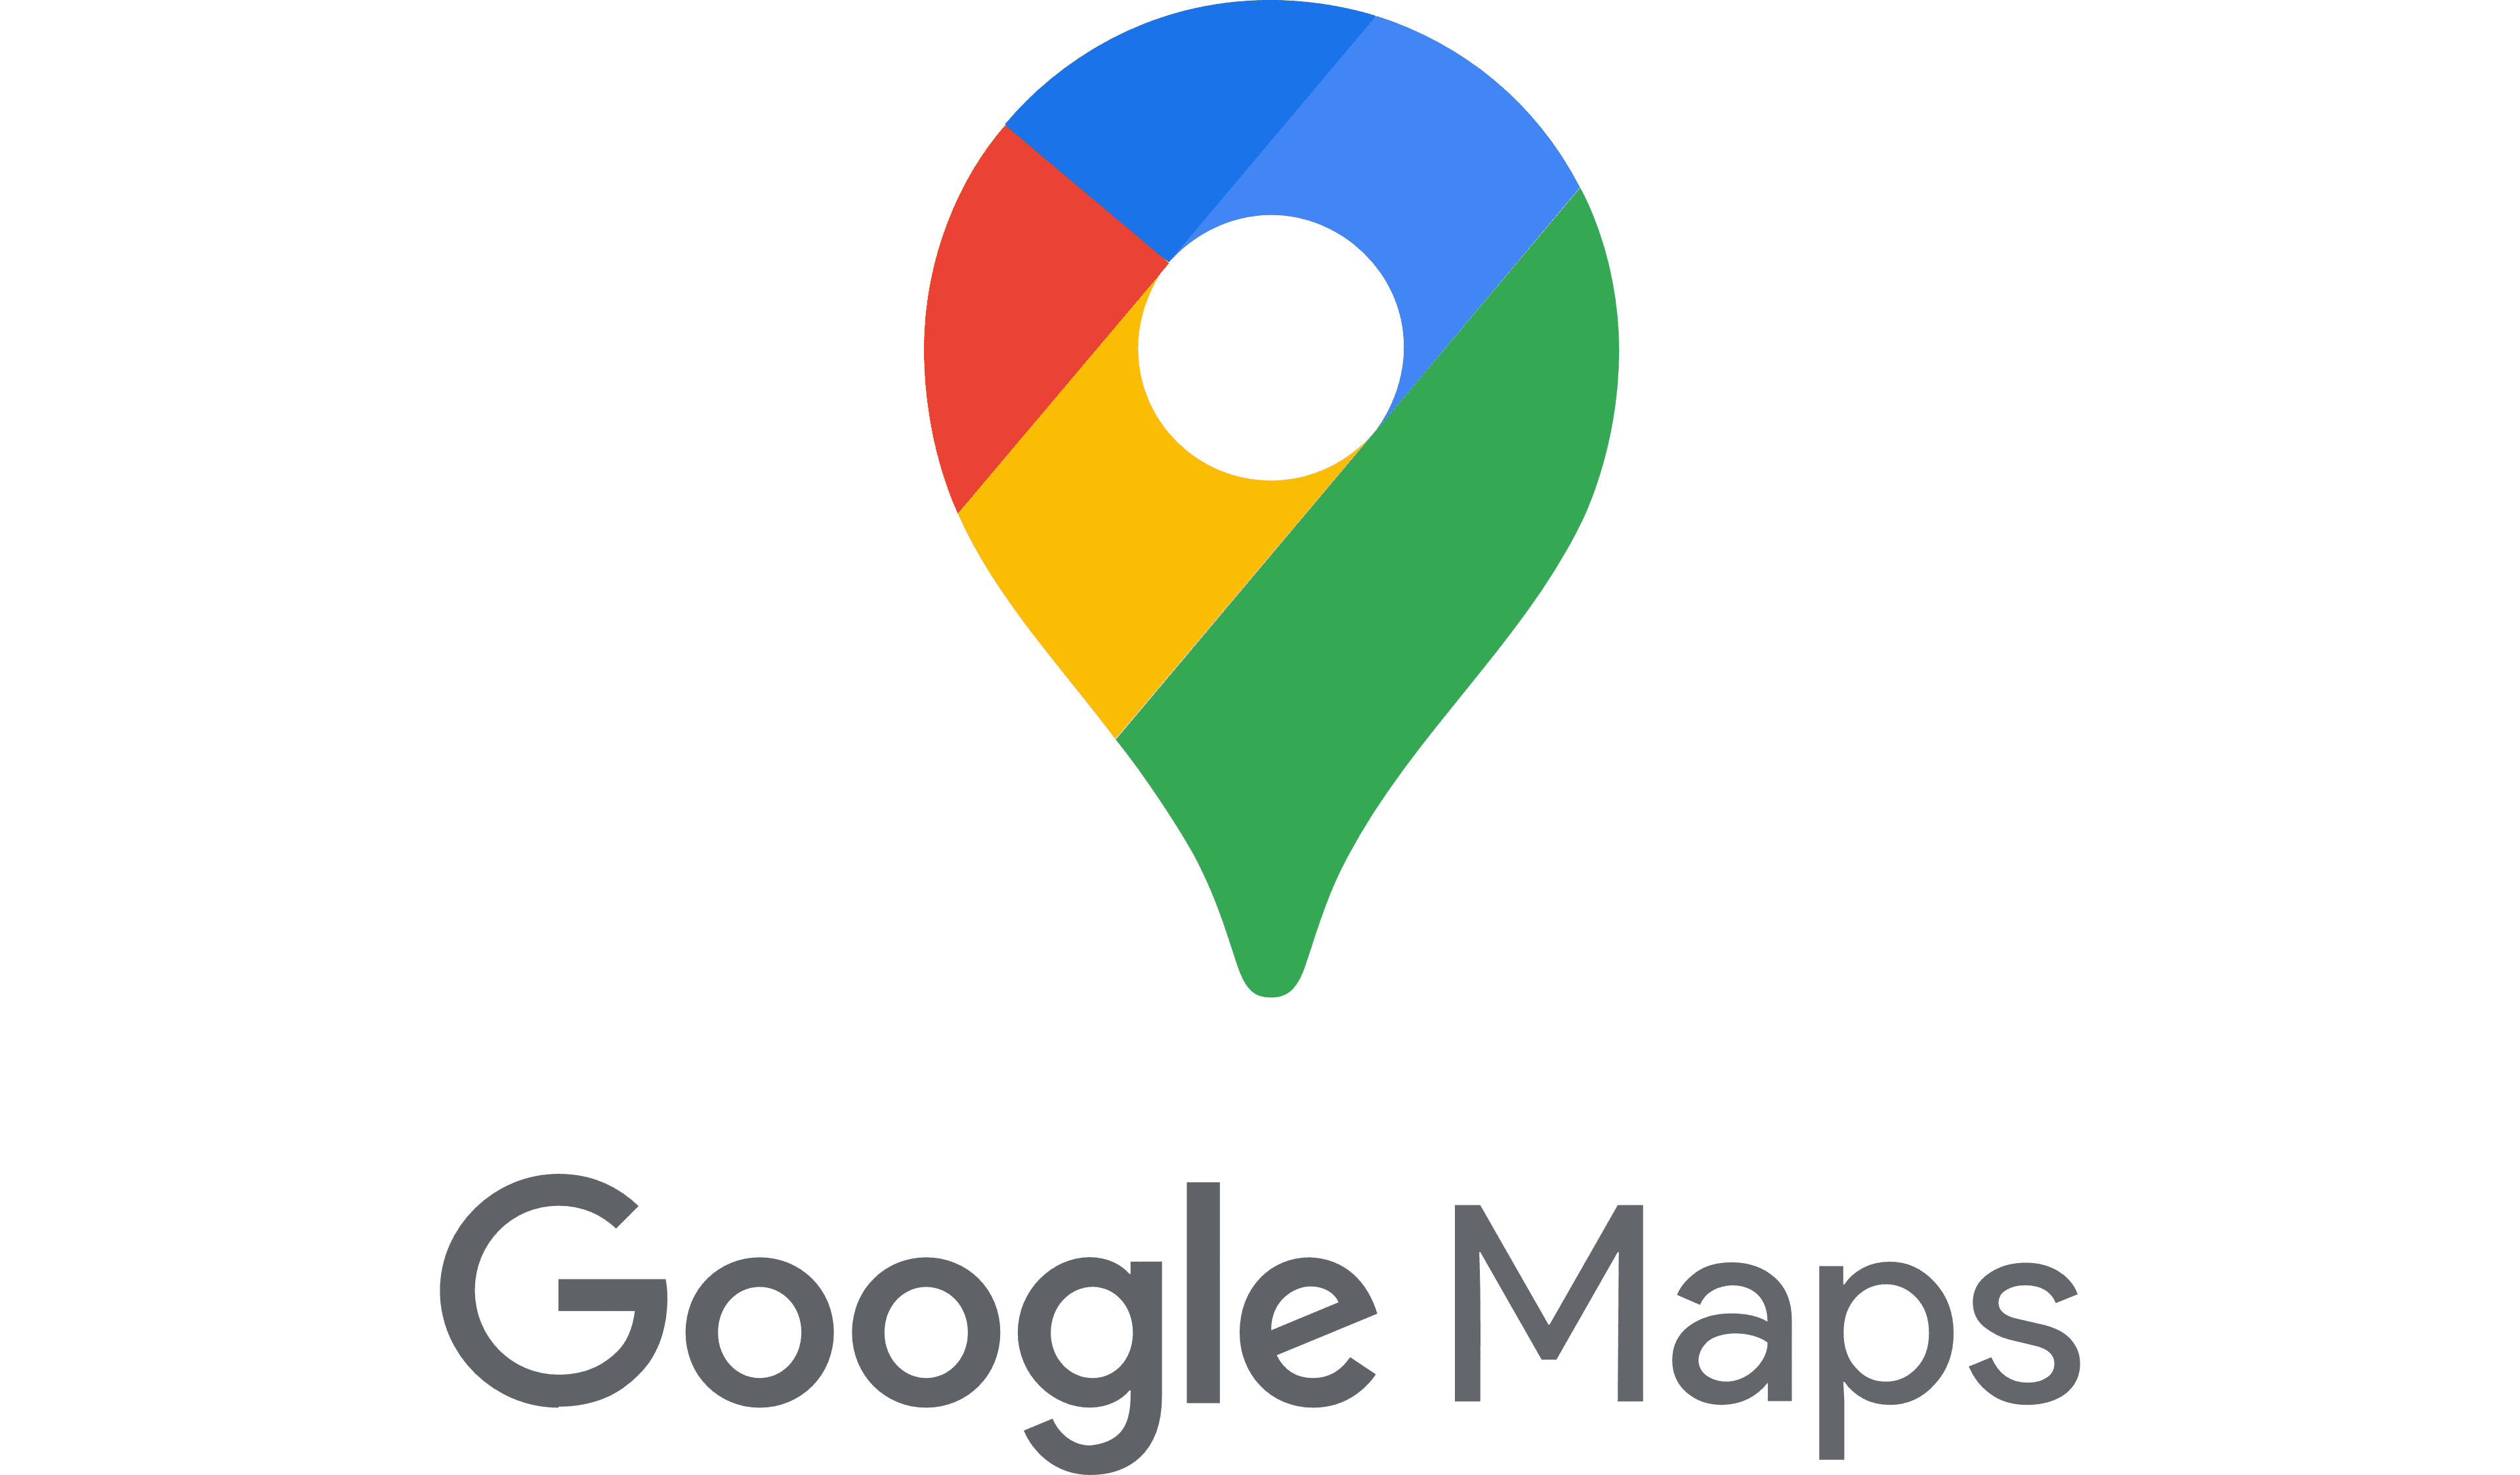 Google Maps Link